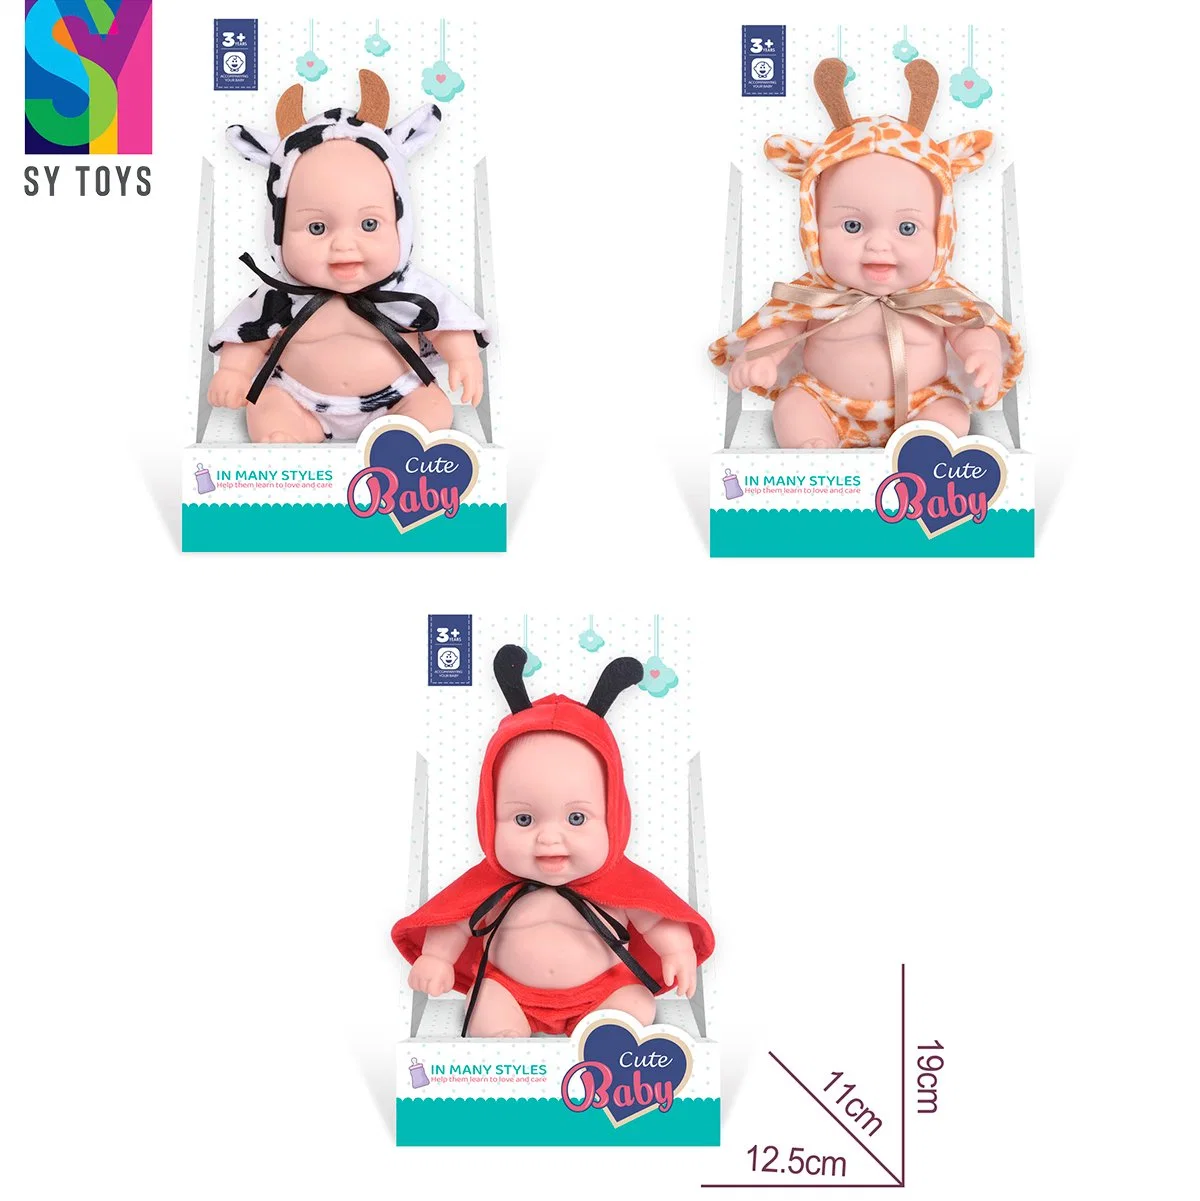 Sy 8 Inch Cute Baby Doll Reborn Baby Realistic Children Fashion Mixed Lifelike Vinyl Baby Dolls Toy Set